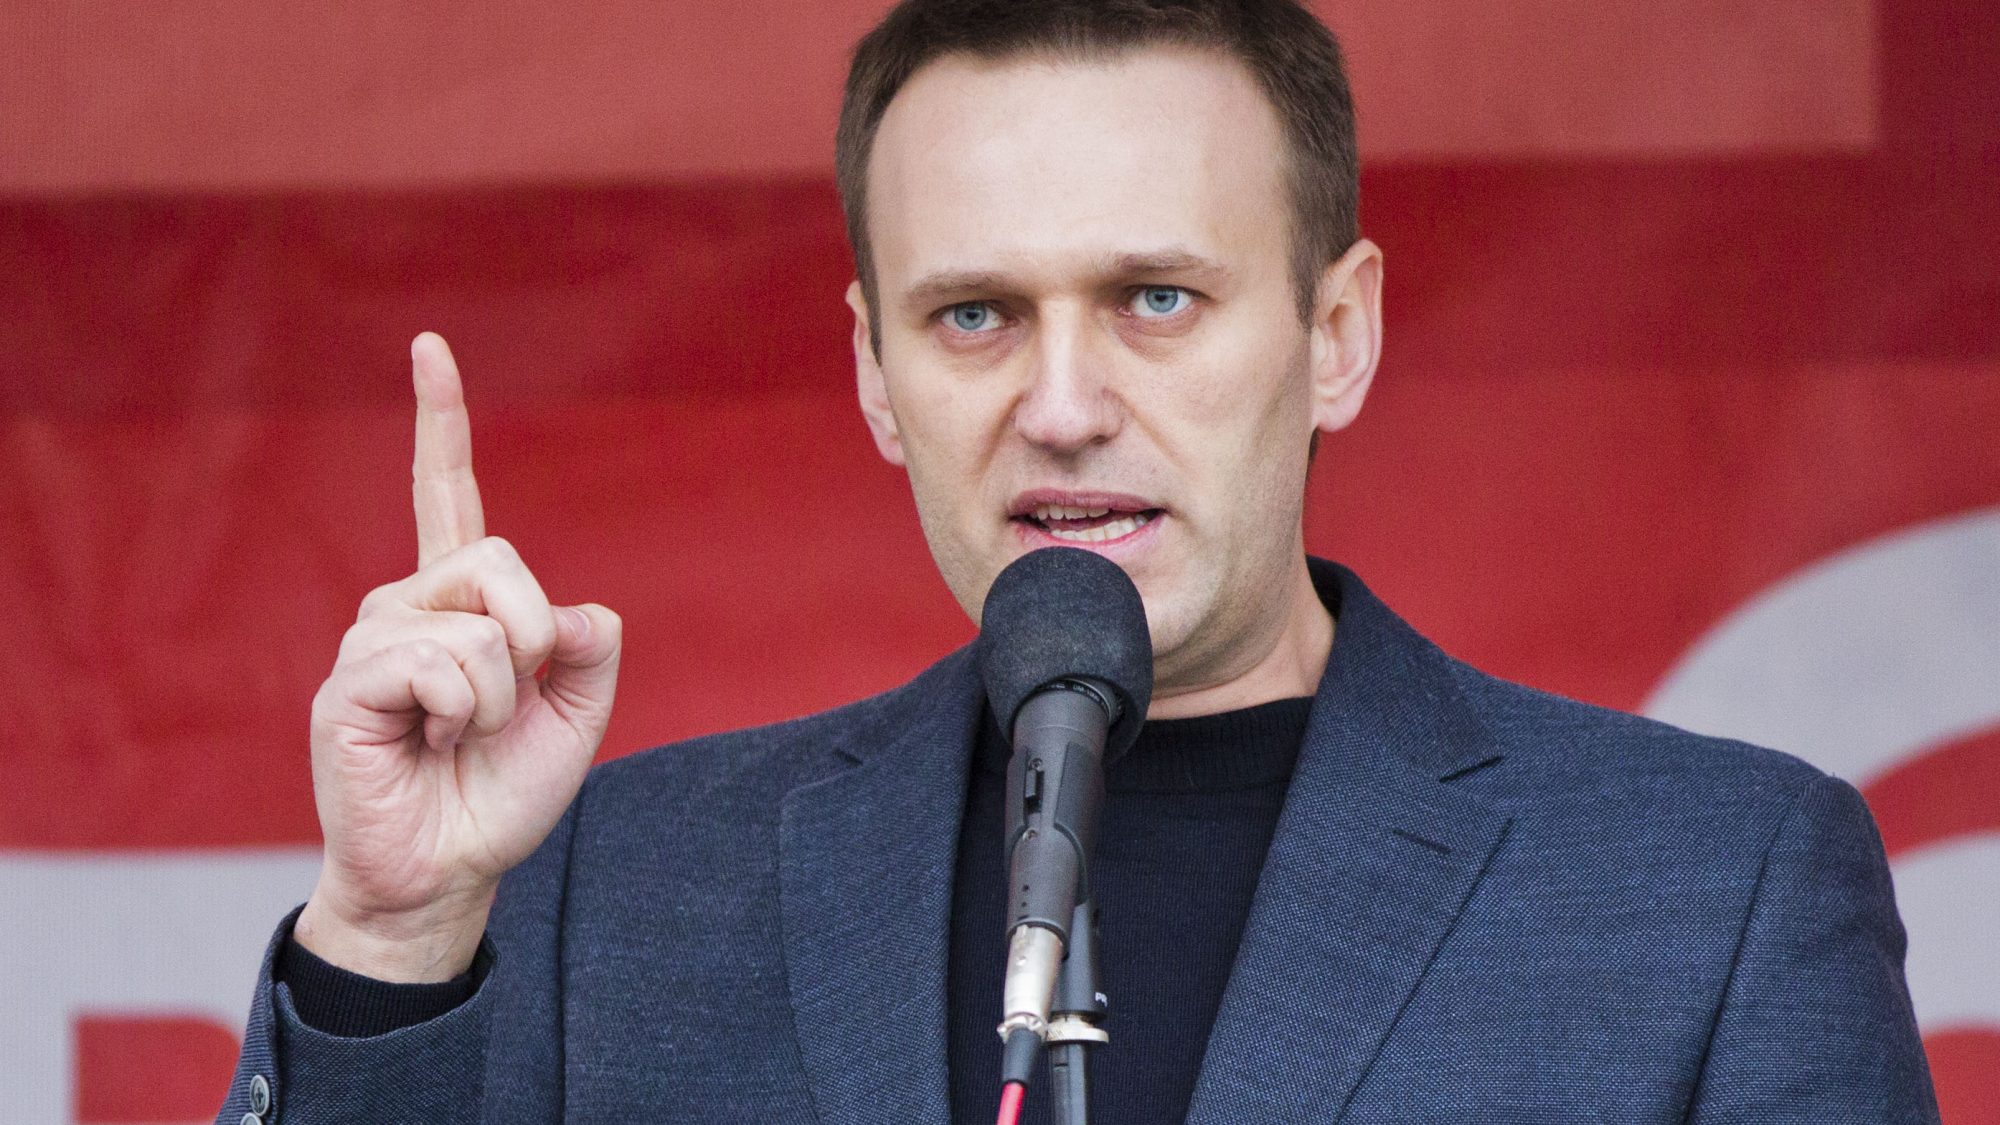 Alexei Navalny Speaking at Event